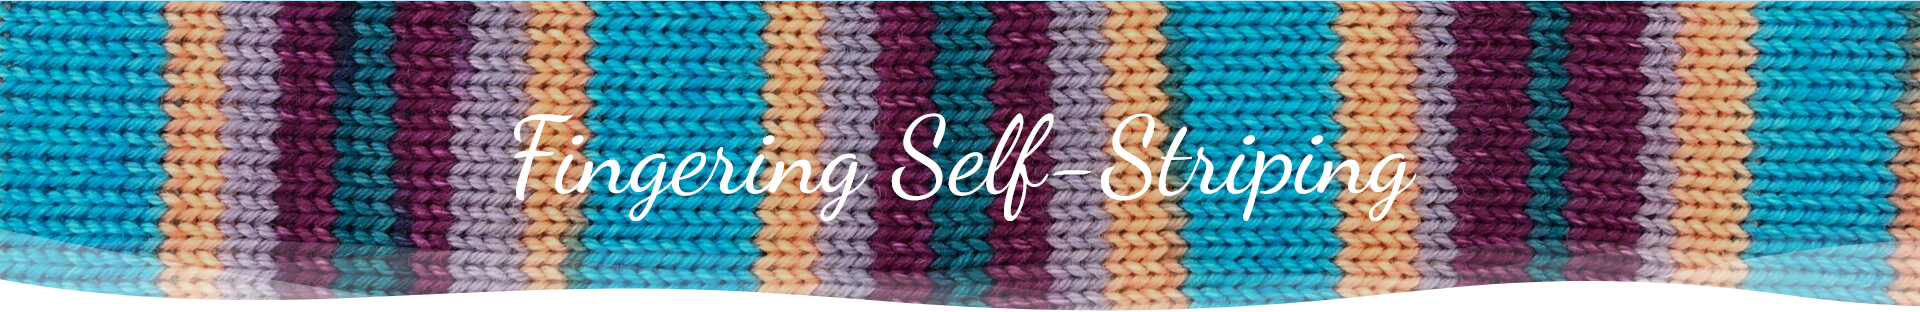 Fingering self-striping yarn banner